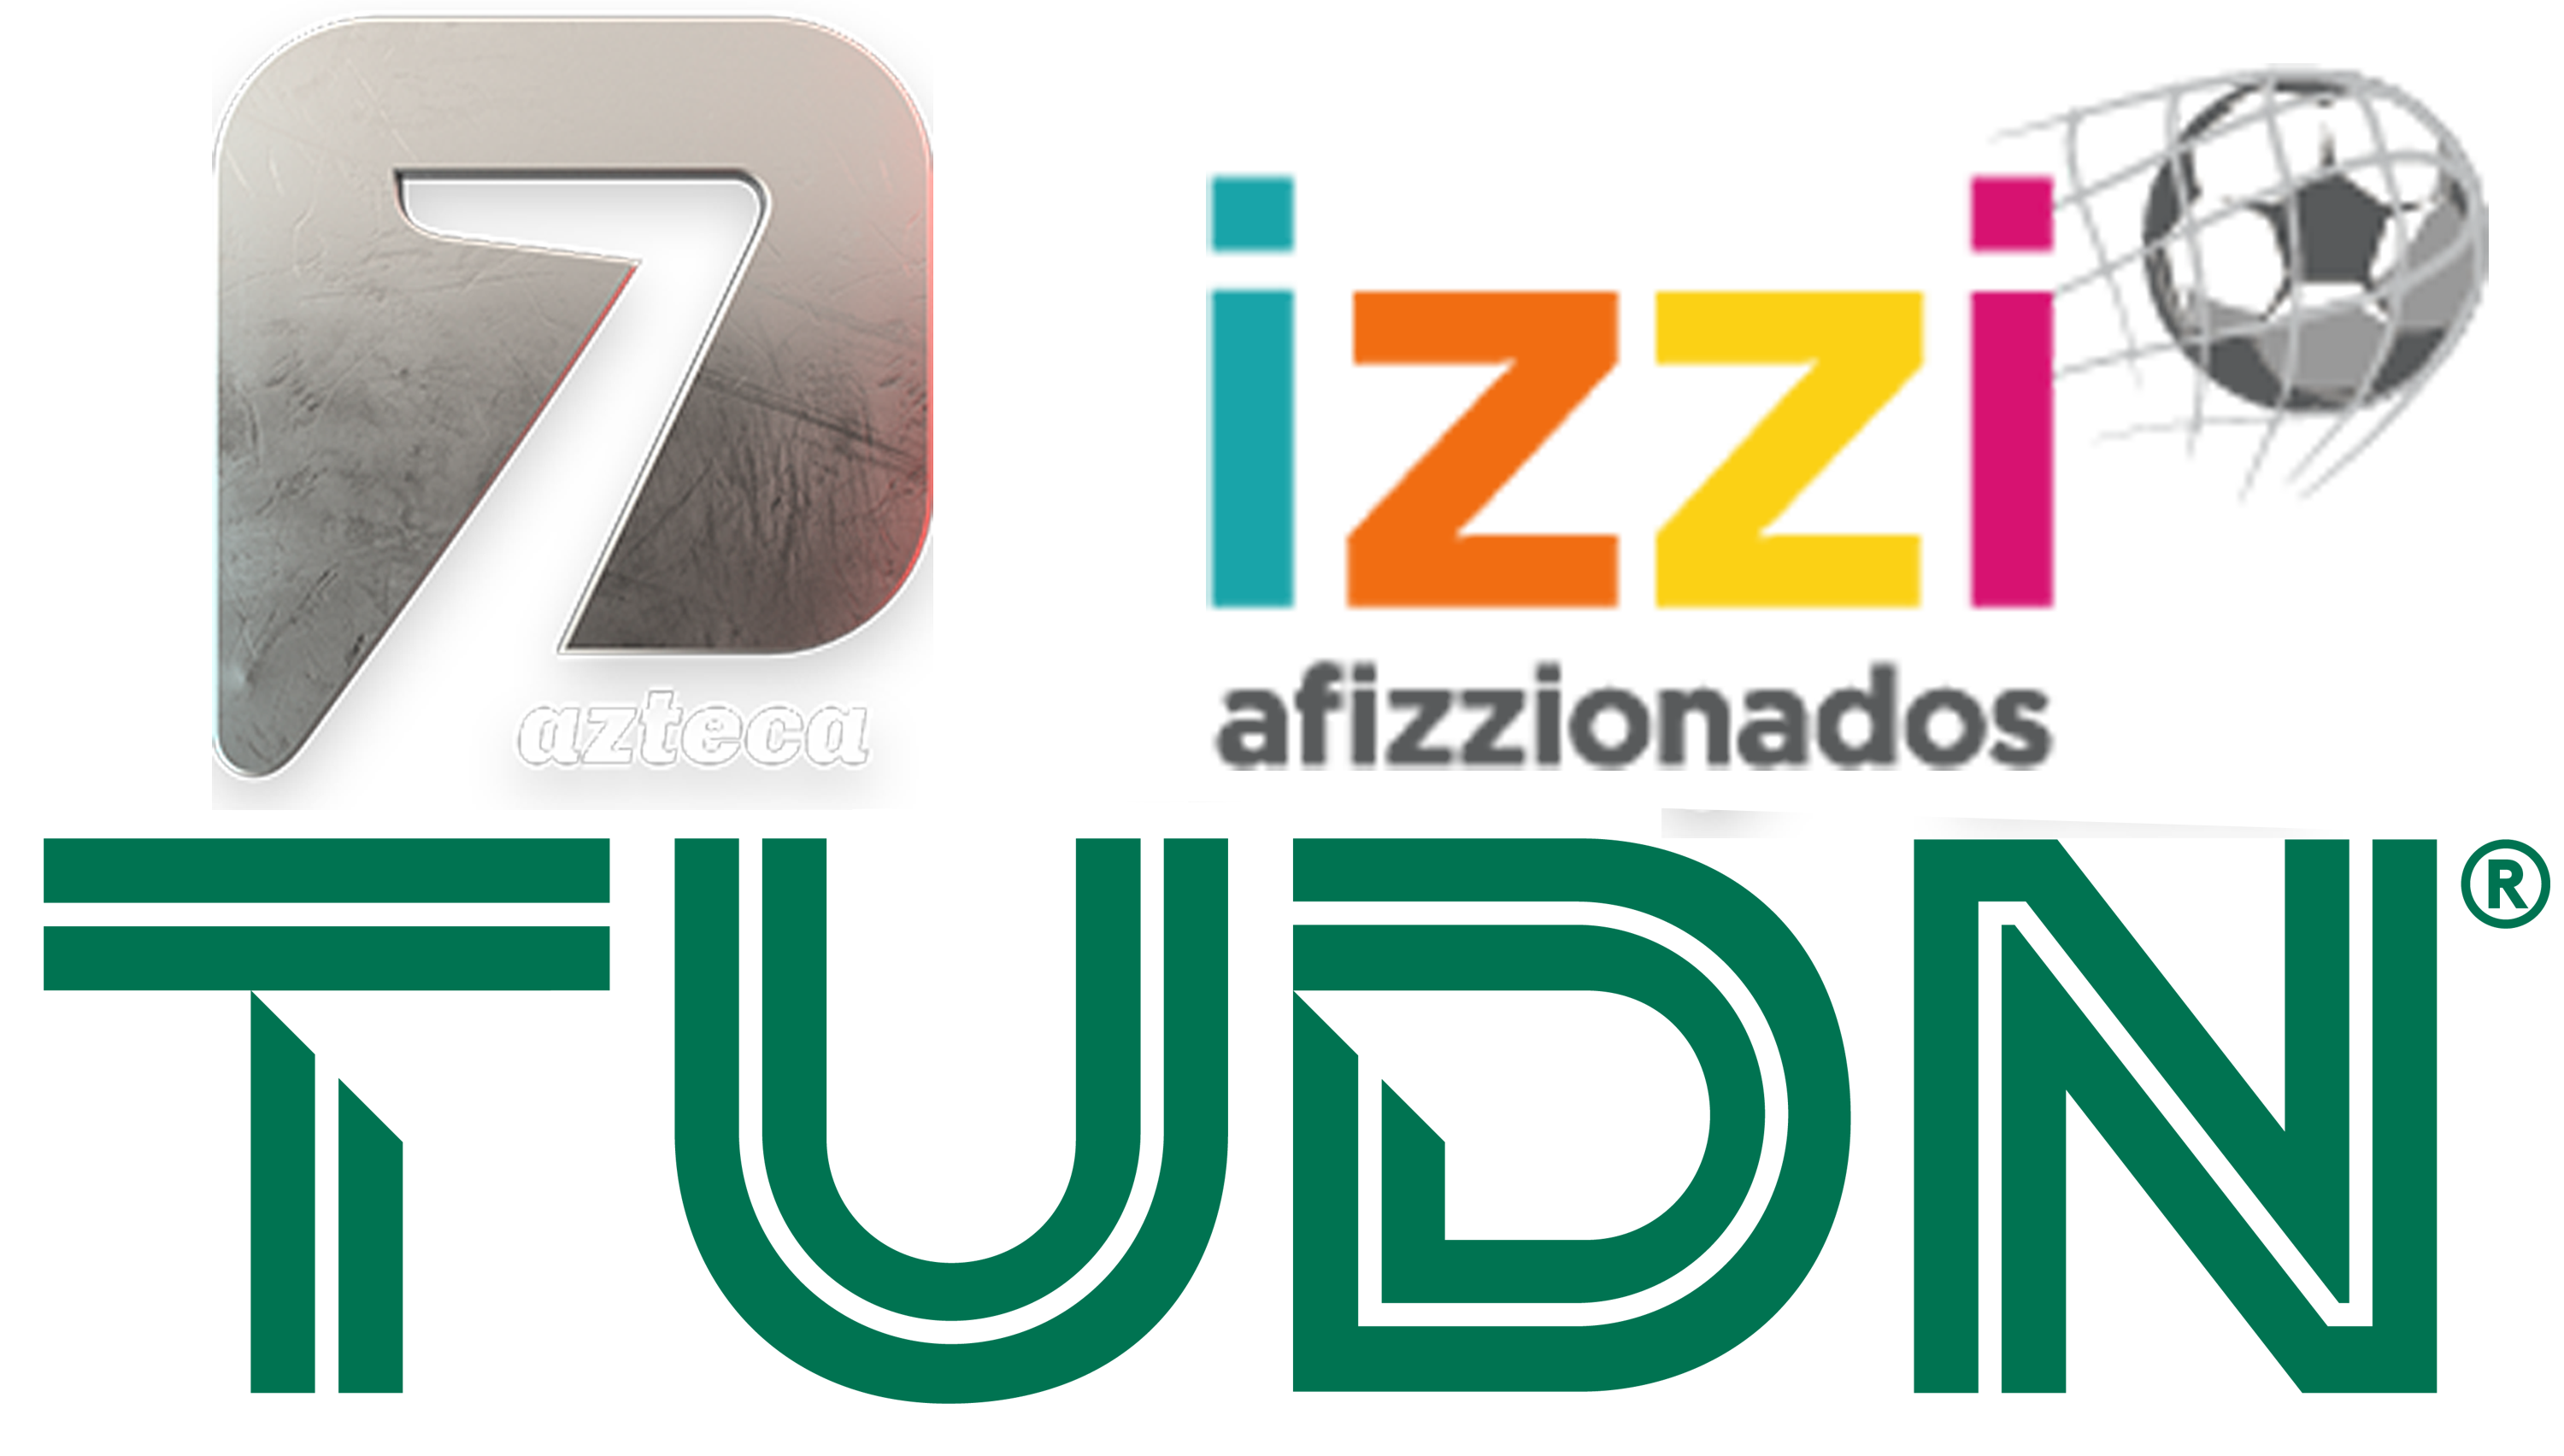 Azteca 7 | TUDN | Afizzionados